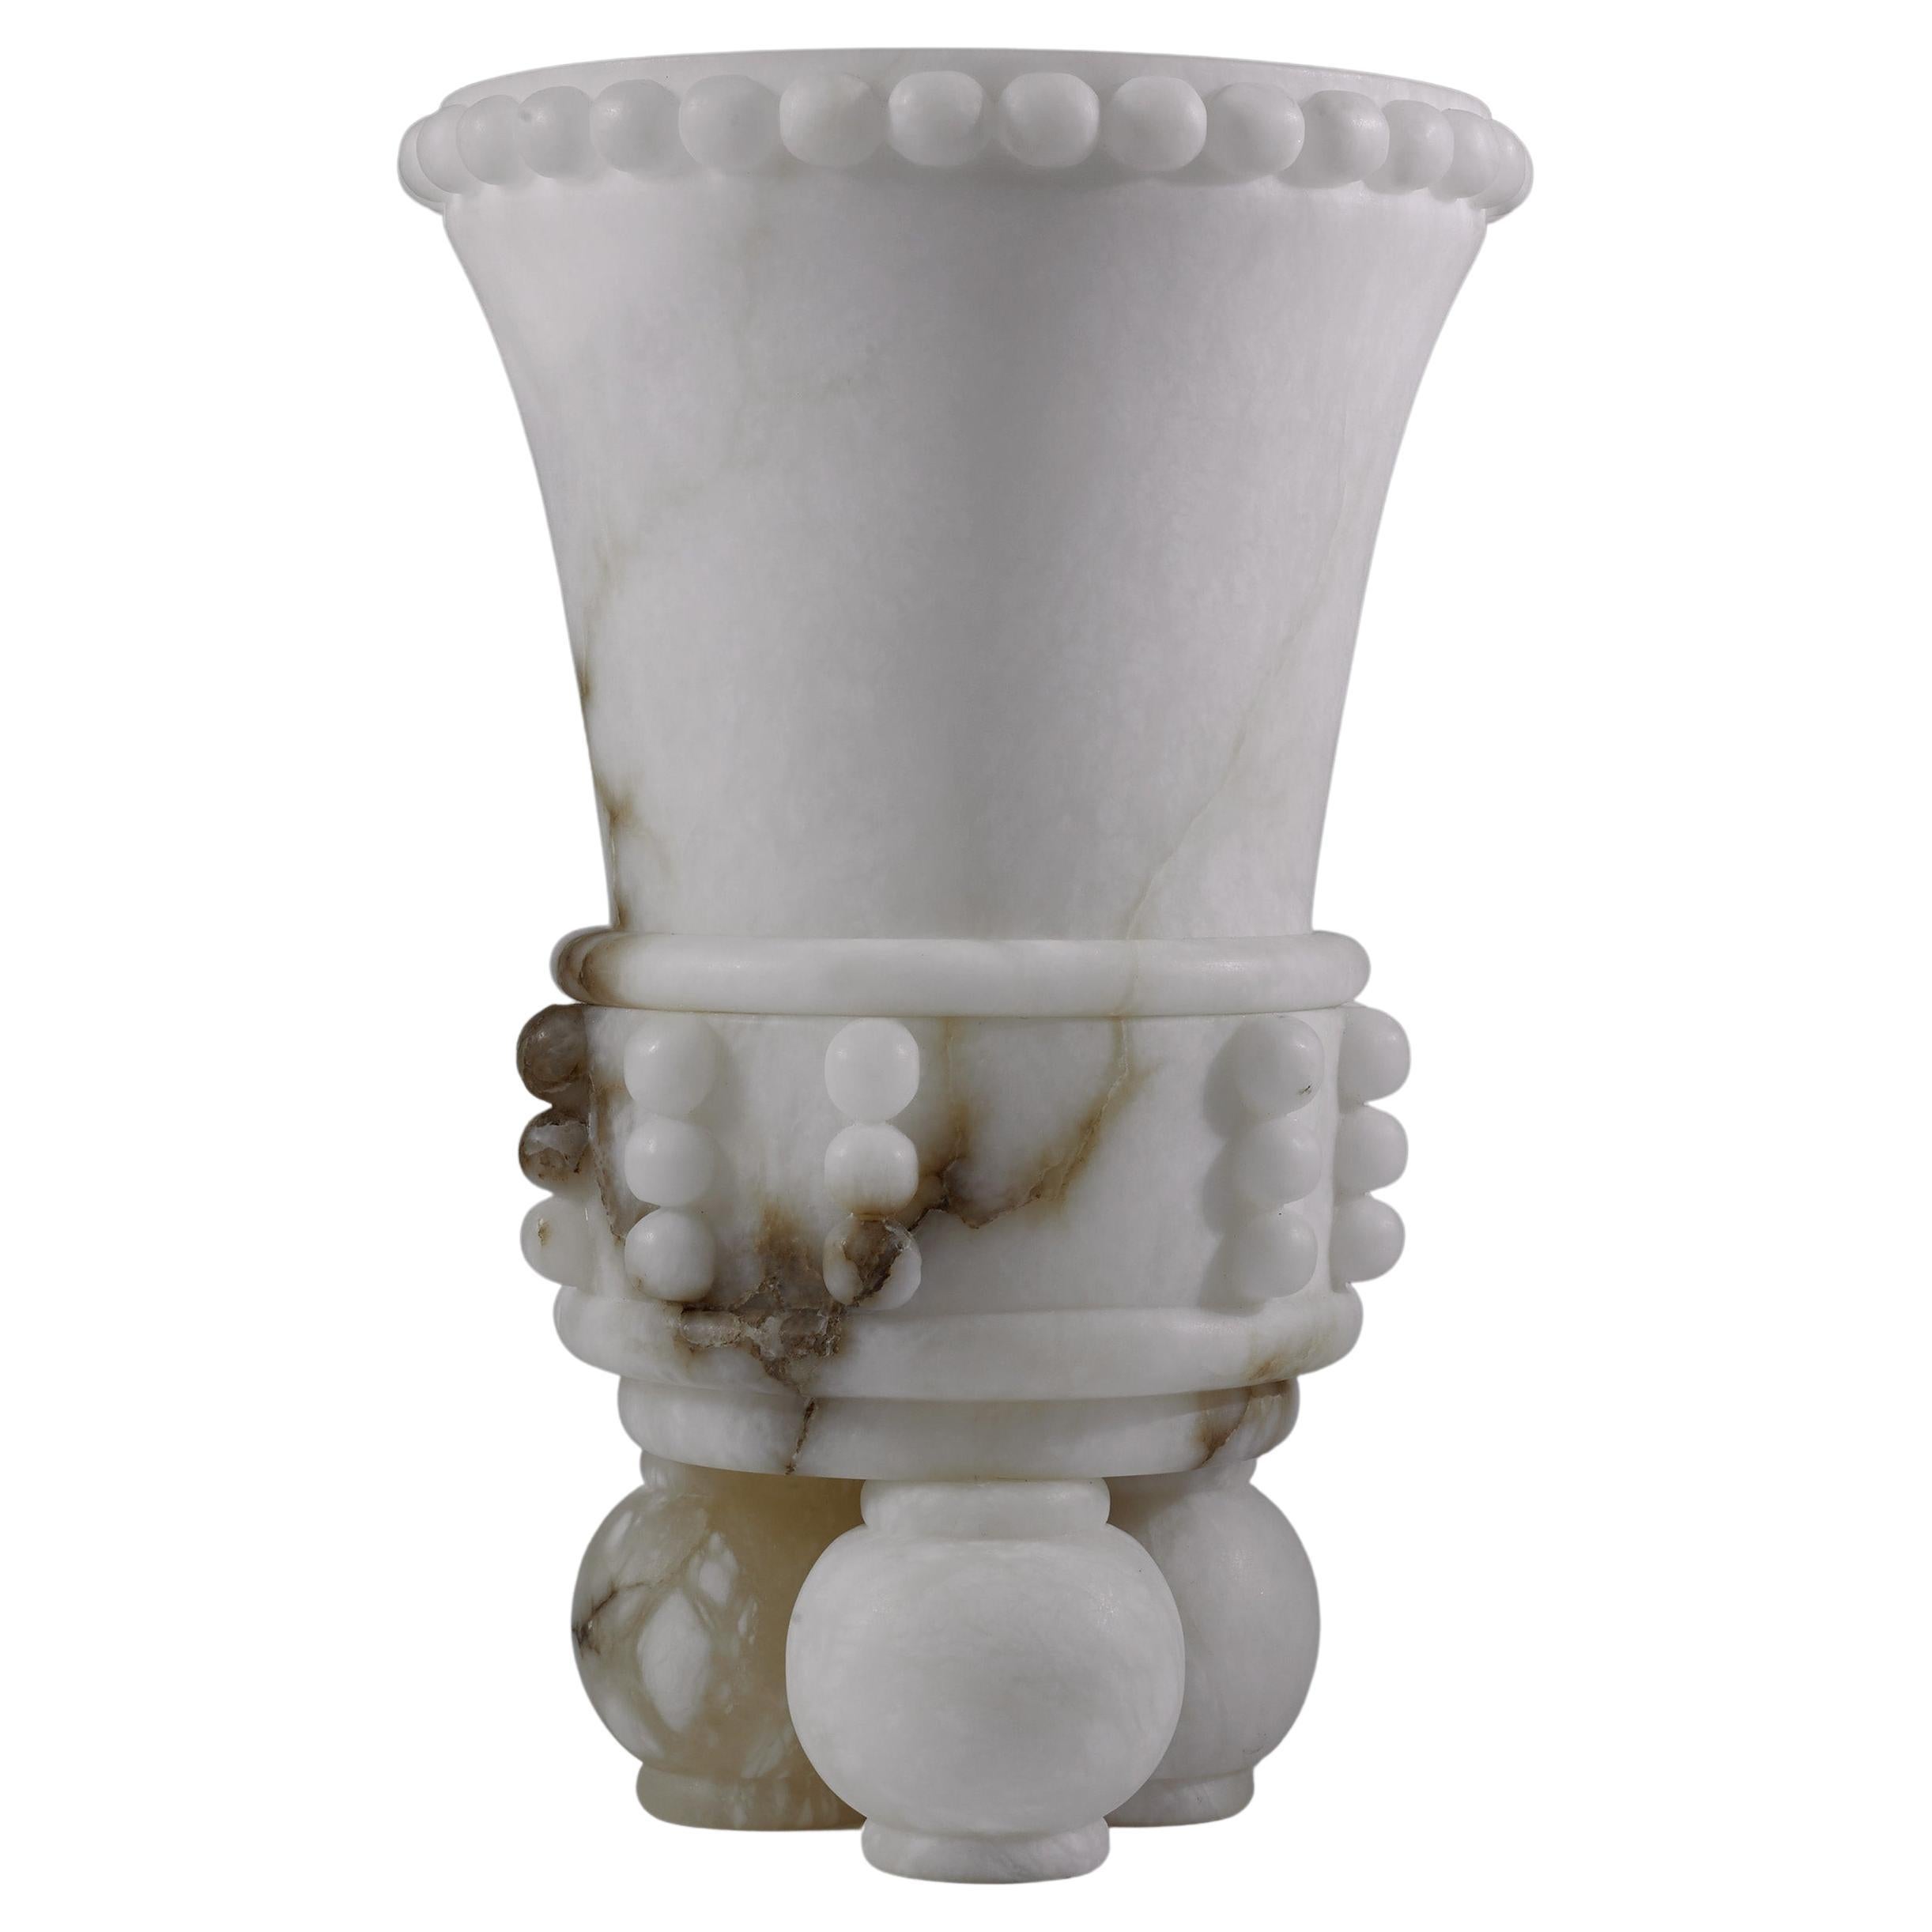 Grand vase en albâtre d'inspiration mayaise